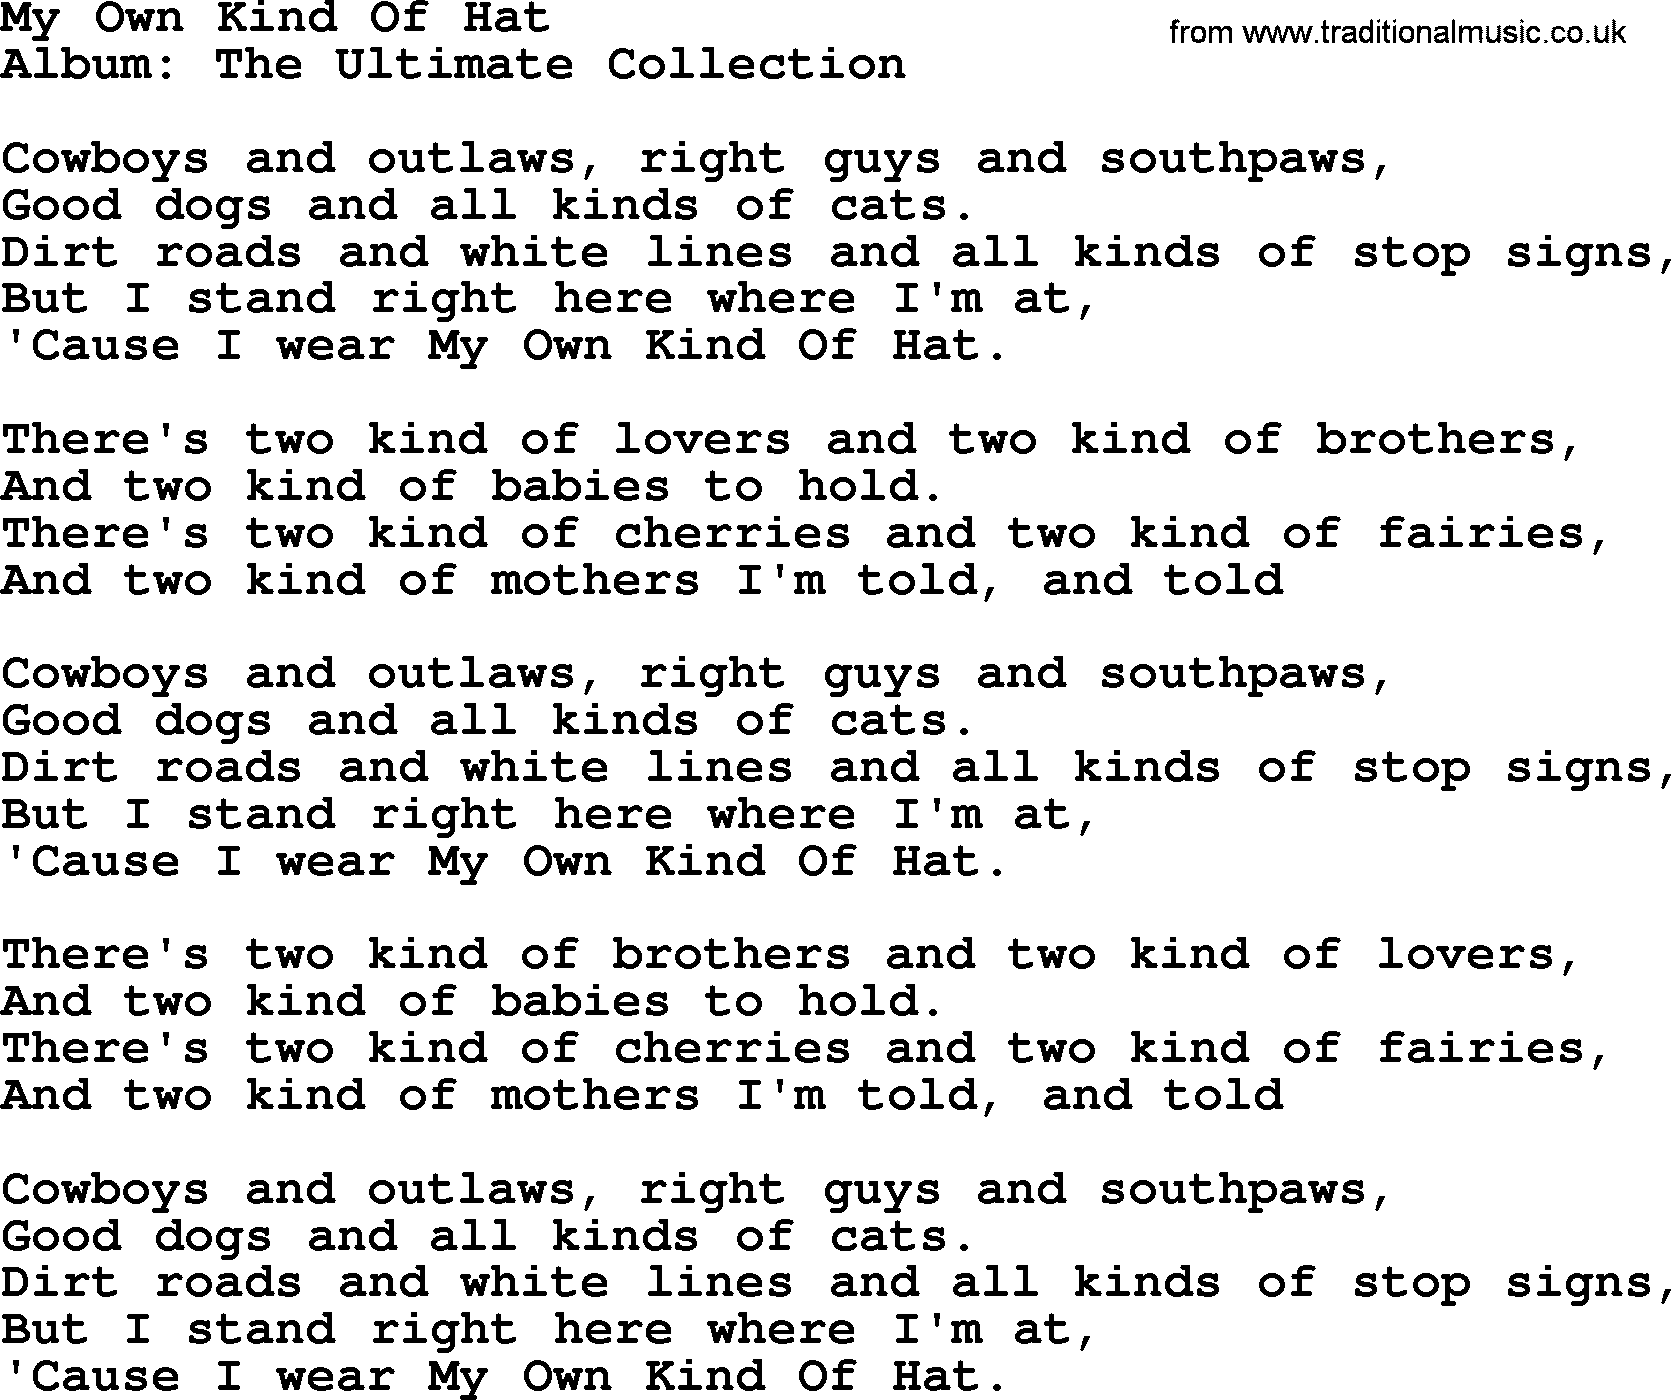 Merle Haggard song: My Own Kind Of Hat, lyrics.